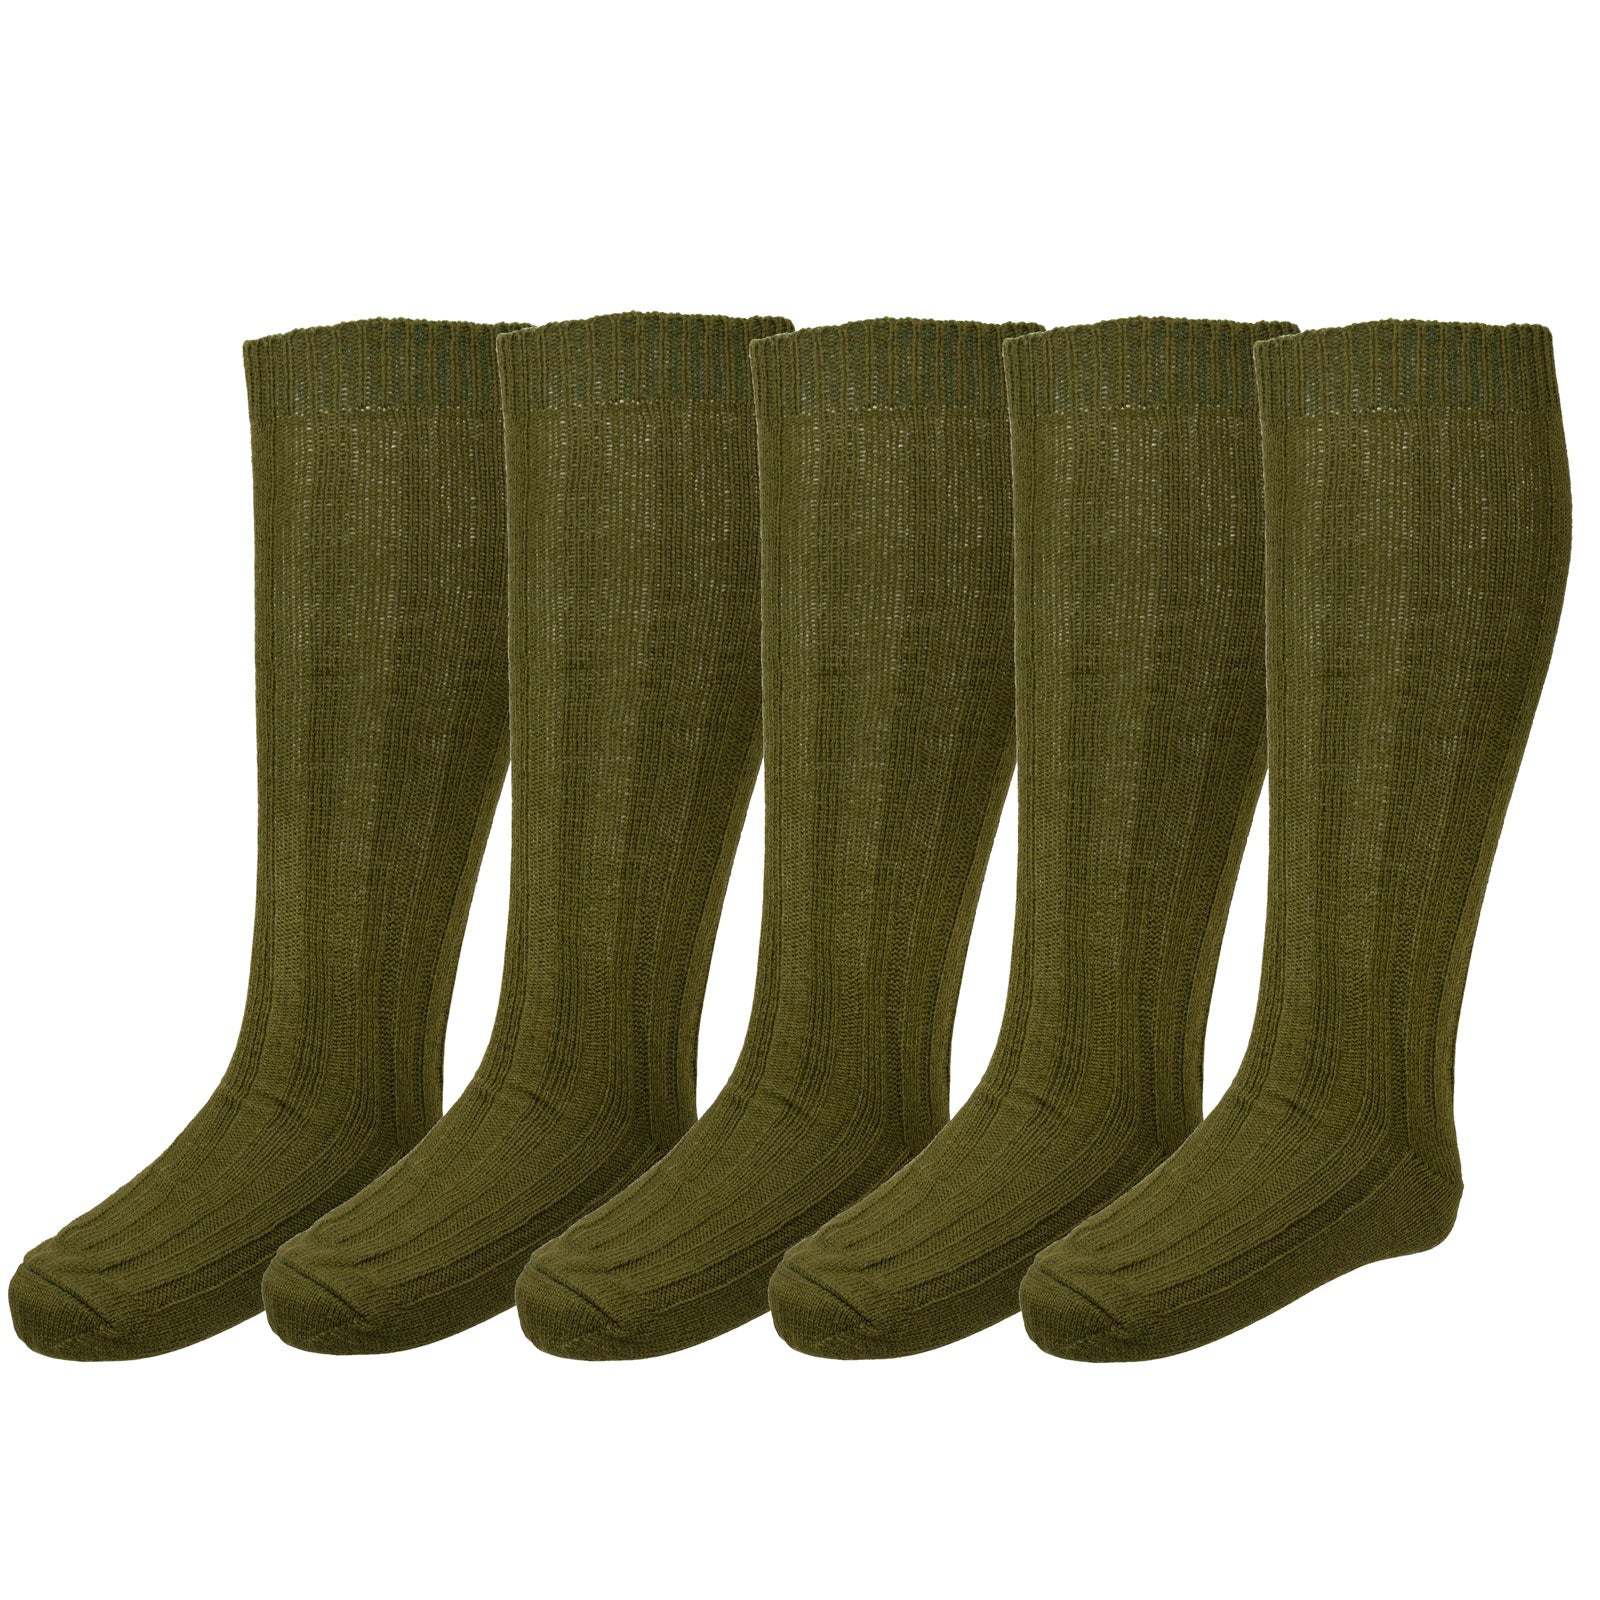 New Czech Army Wool Socks [5-pack]